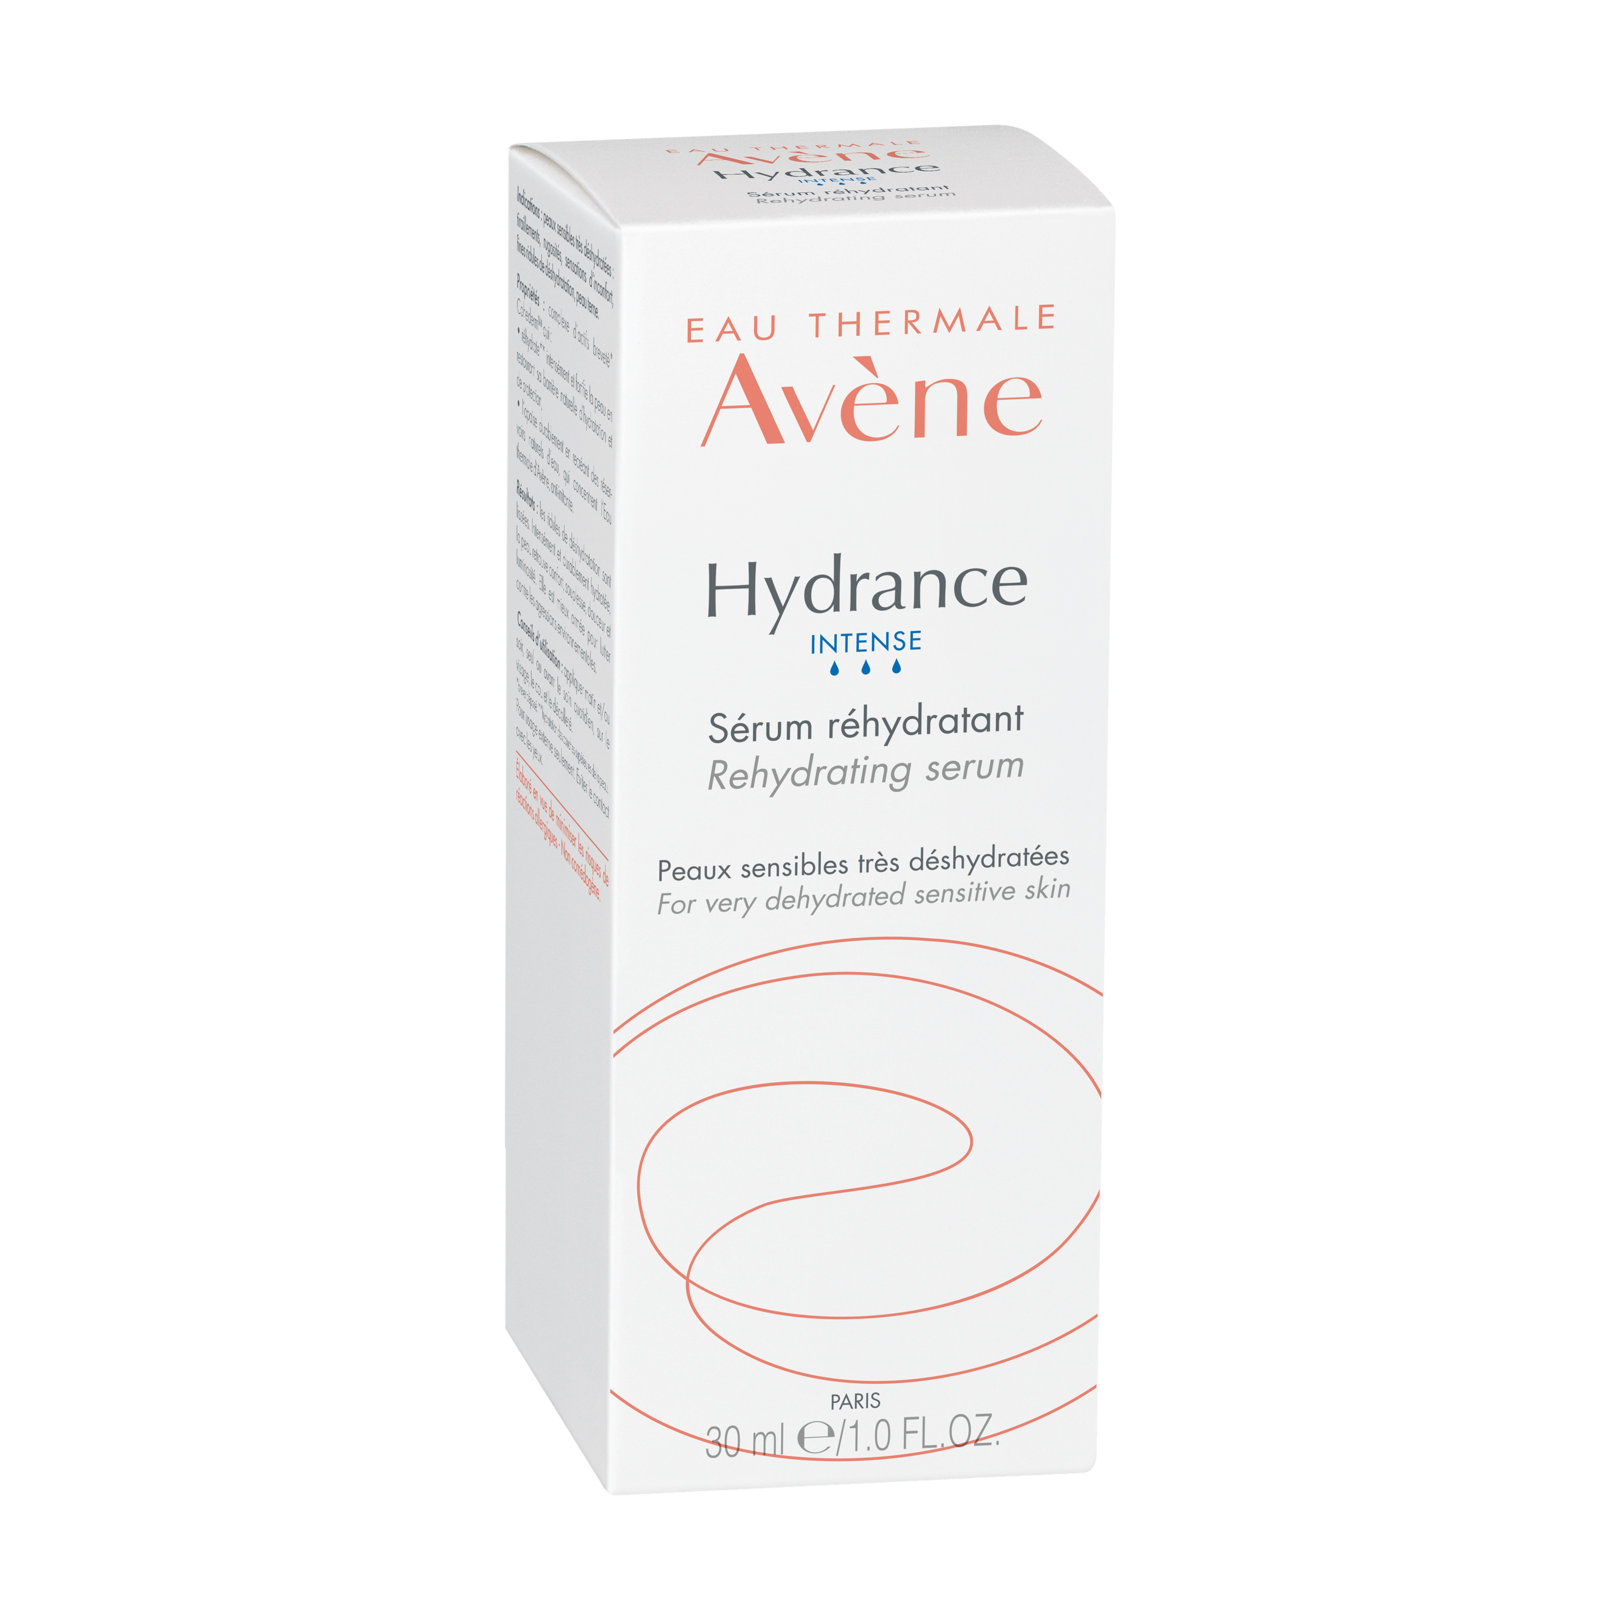 Hydrance Intense Rehydrating Serum